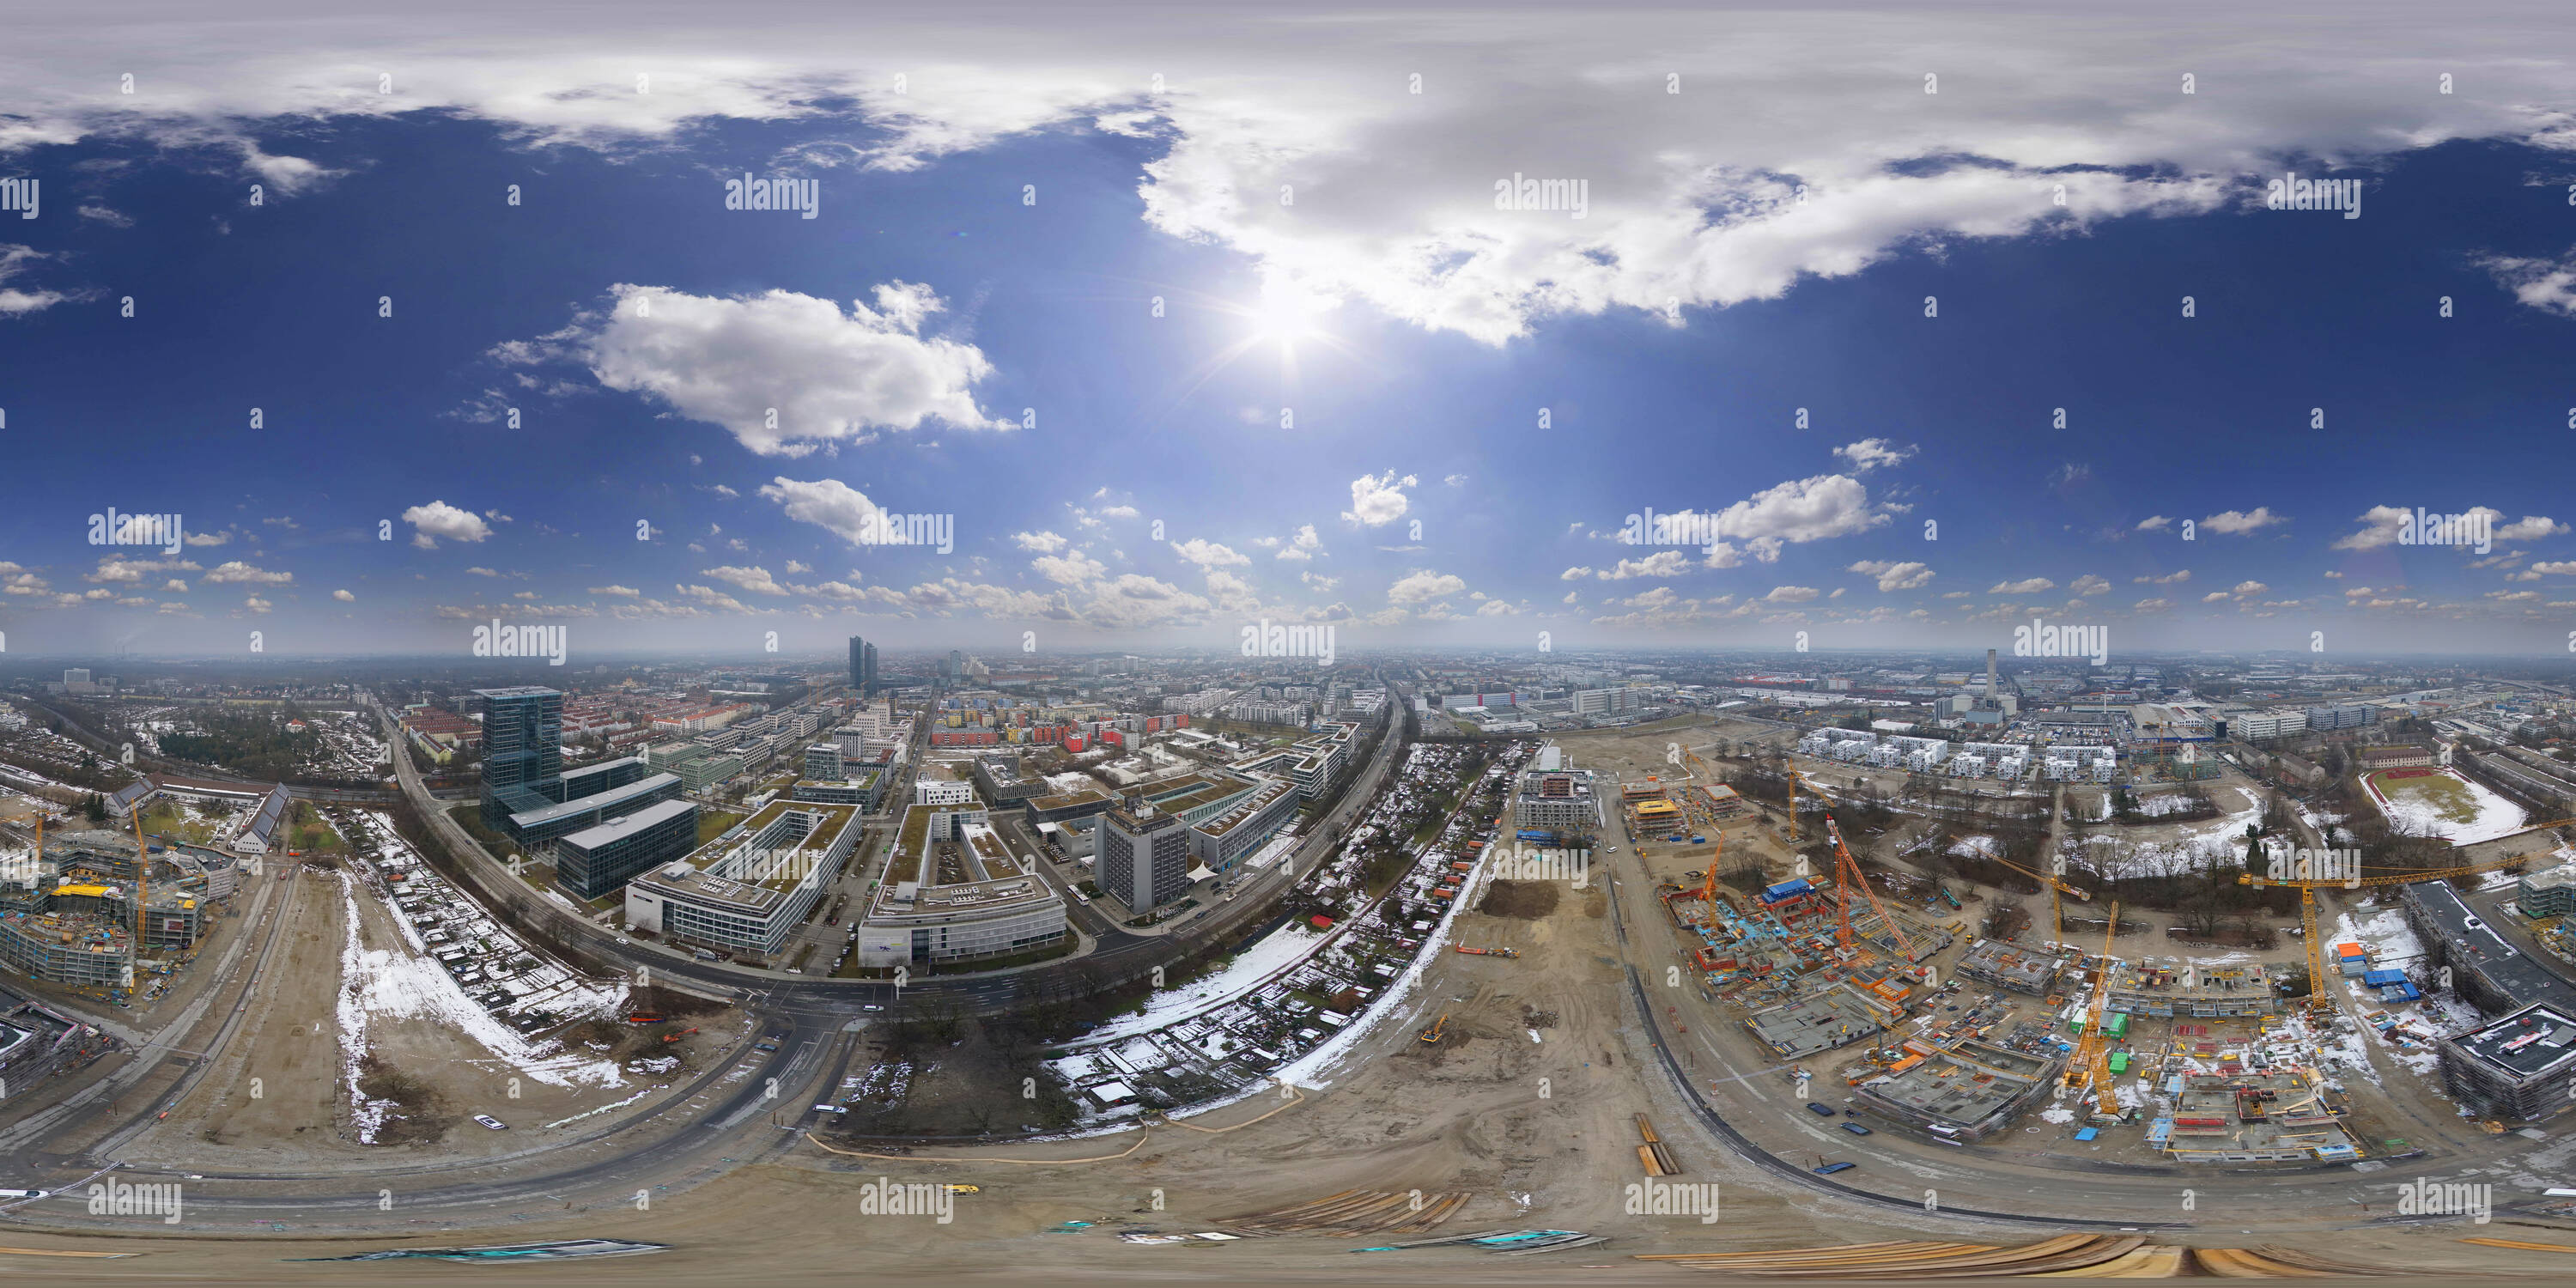 Categorie Ik was mijn kleren astronaut 360° view of Building Site Munich North, Domagkstrasse - Frankfurter Ring,  Aerial View - Alamy